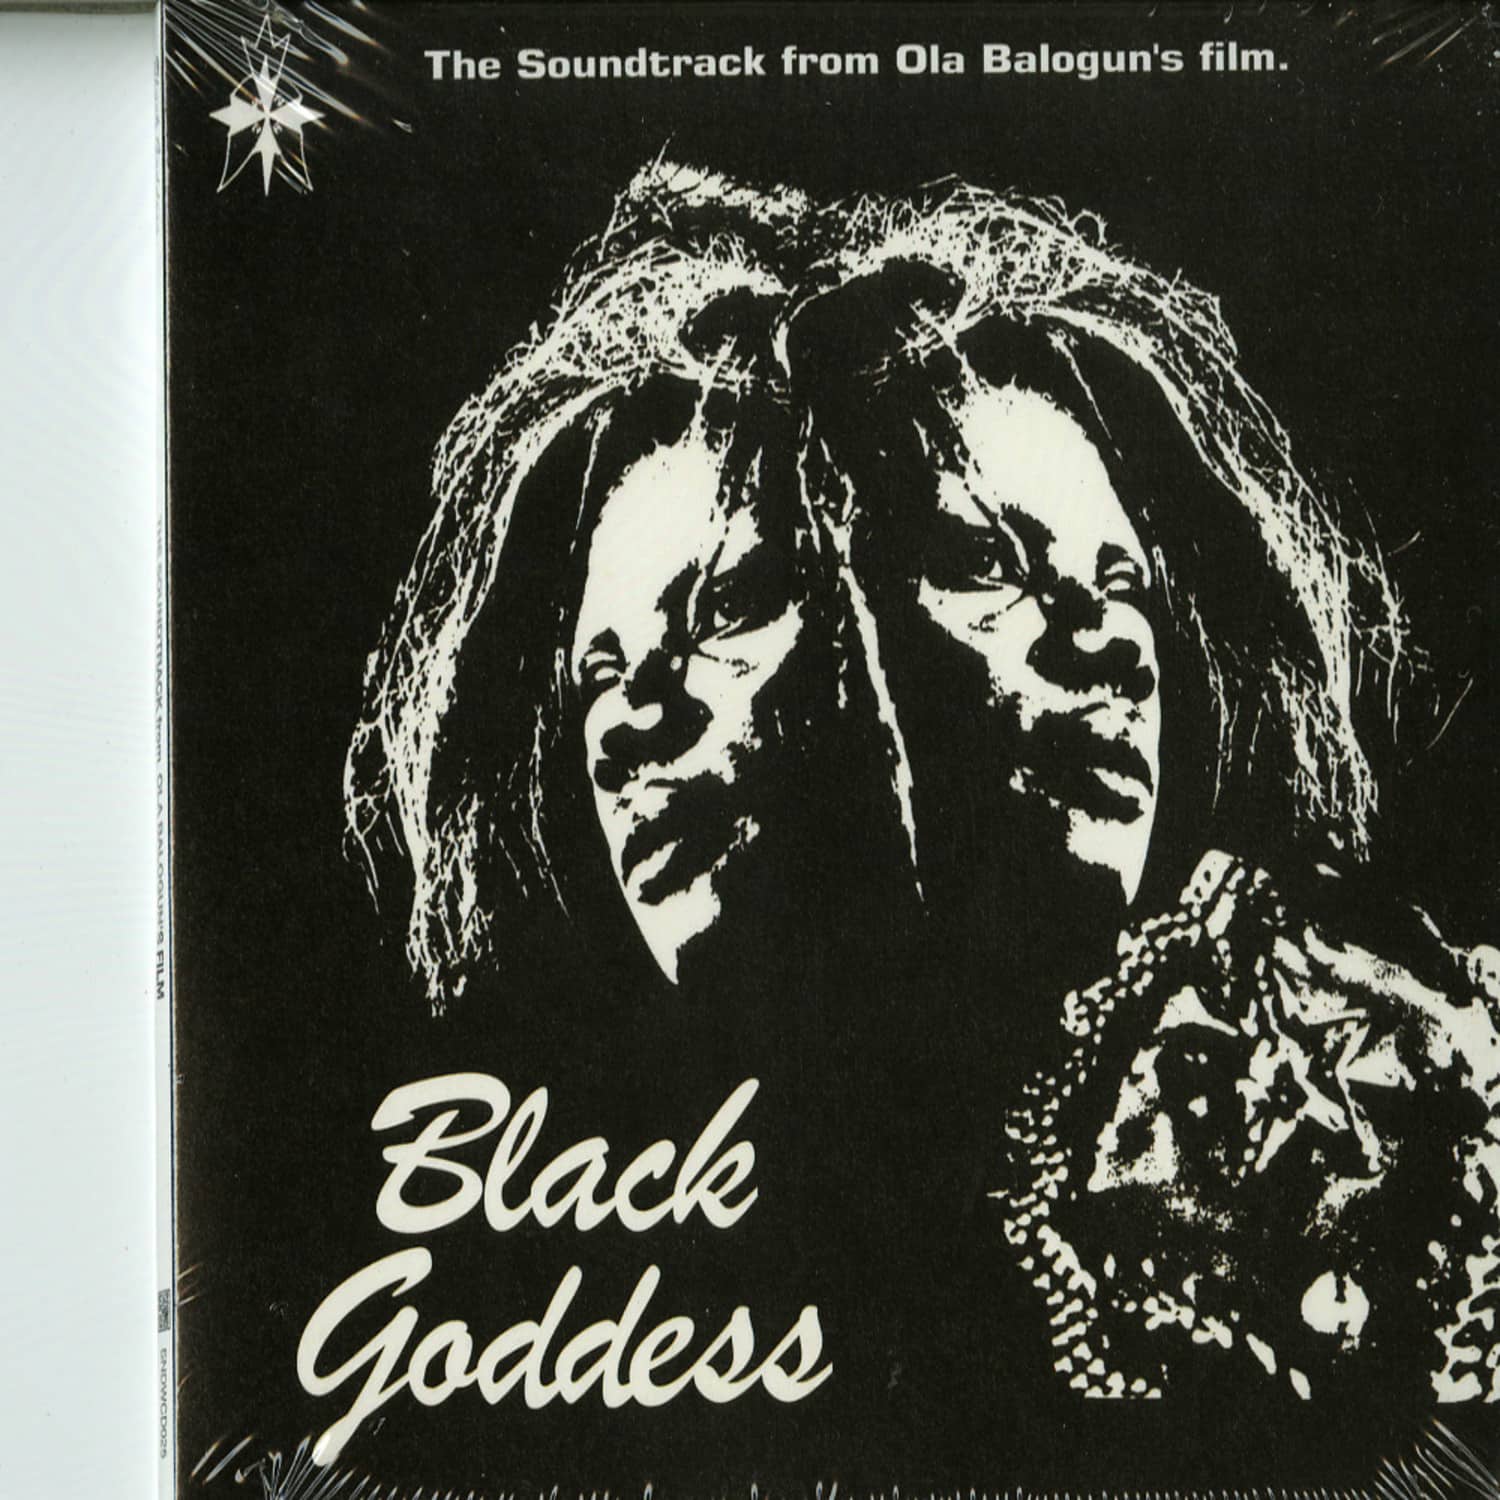 Black Goddess - THE SOUNDTRACK FROM OLA BALOGUNS FILM 